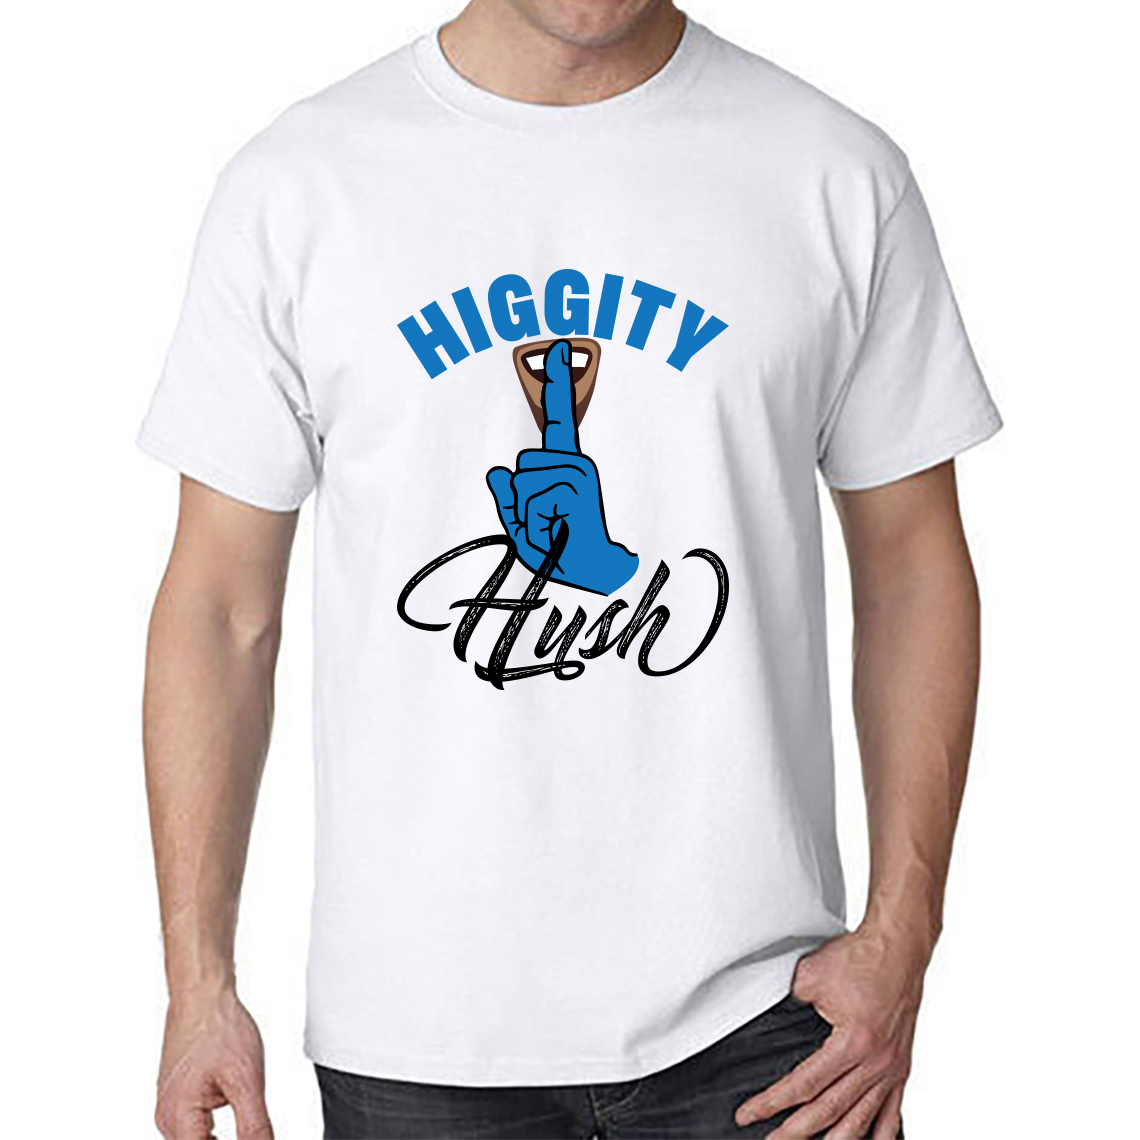 t shirt design higgity hush